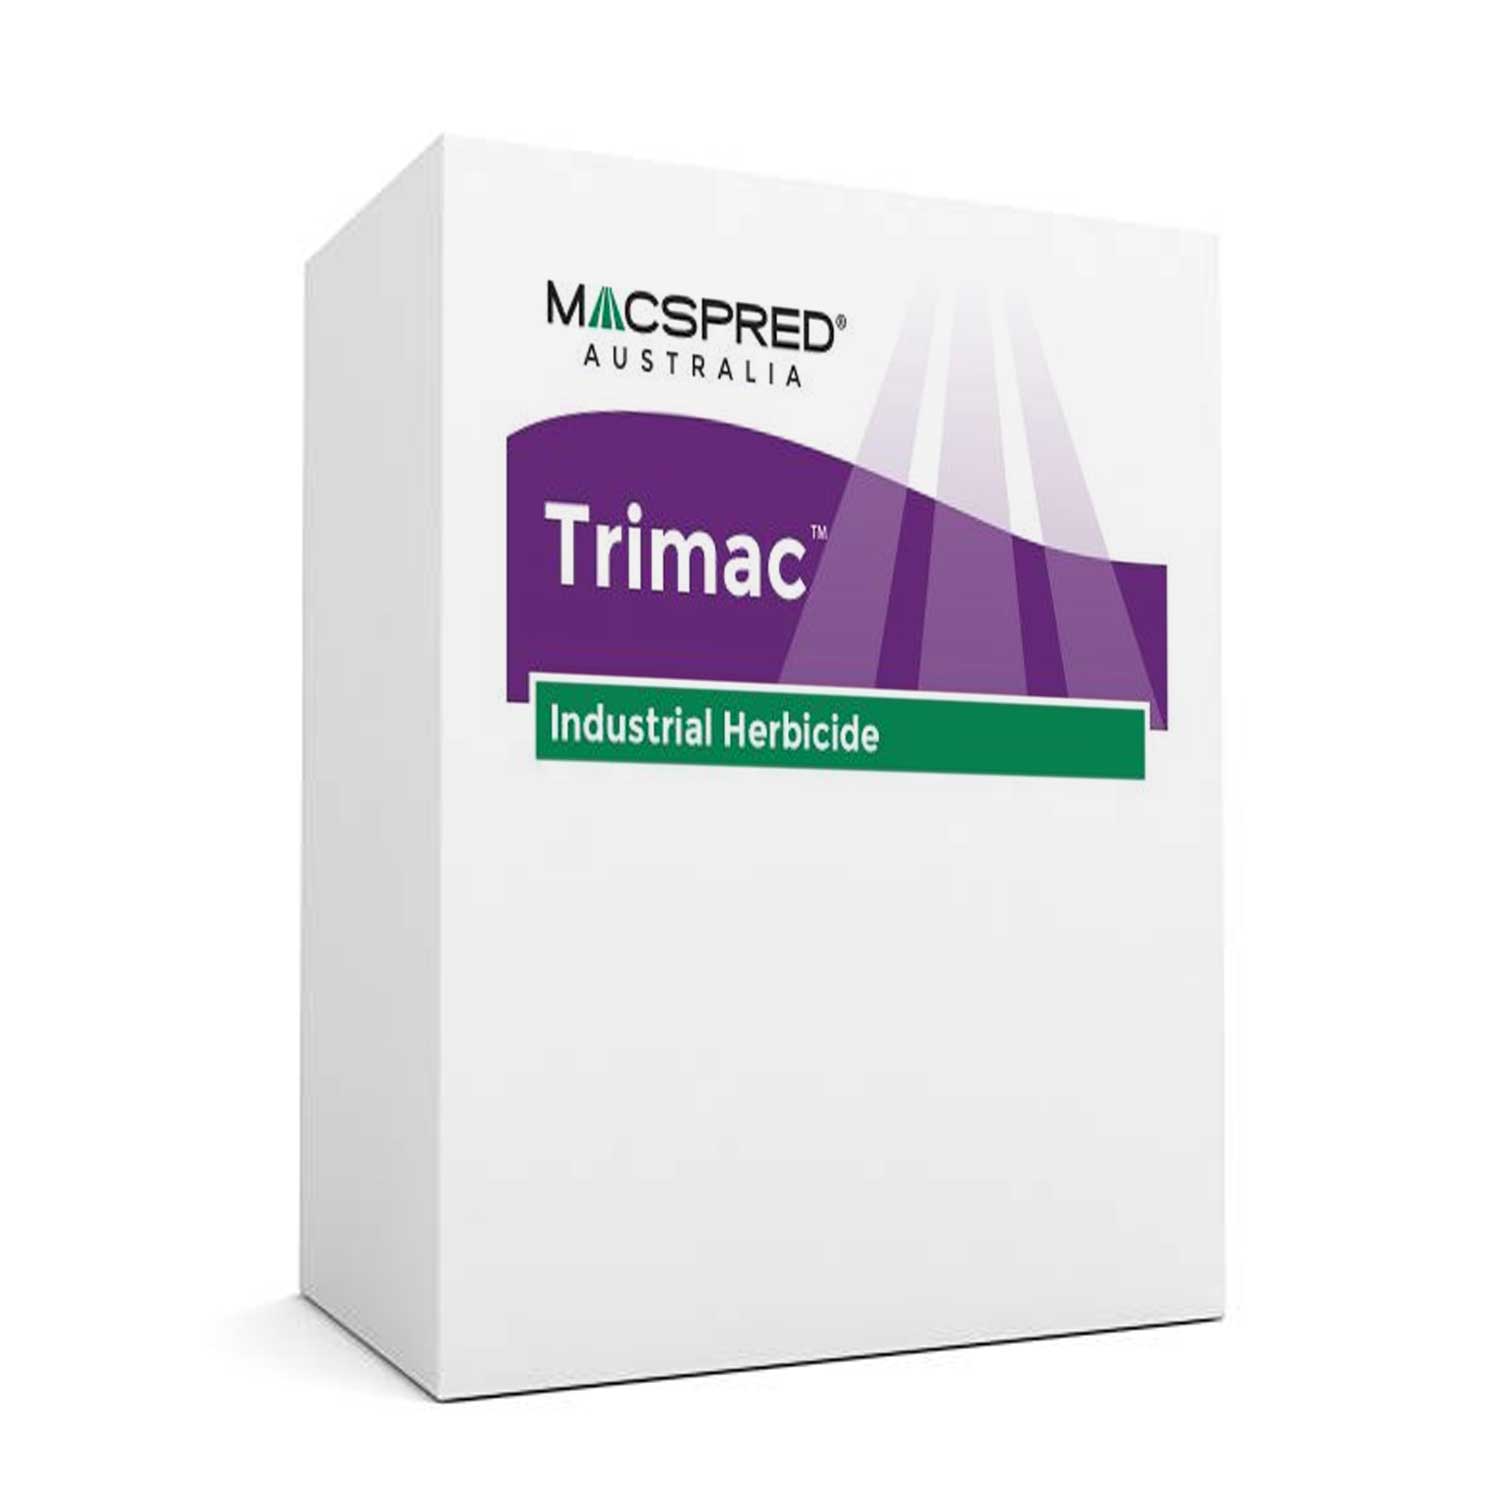 Macspred Trimac Terbacil Sulfometuron Methyl